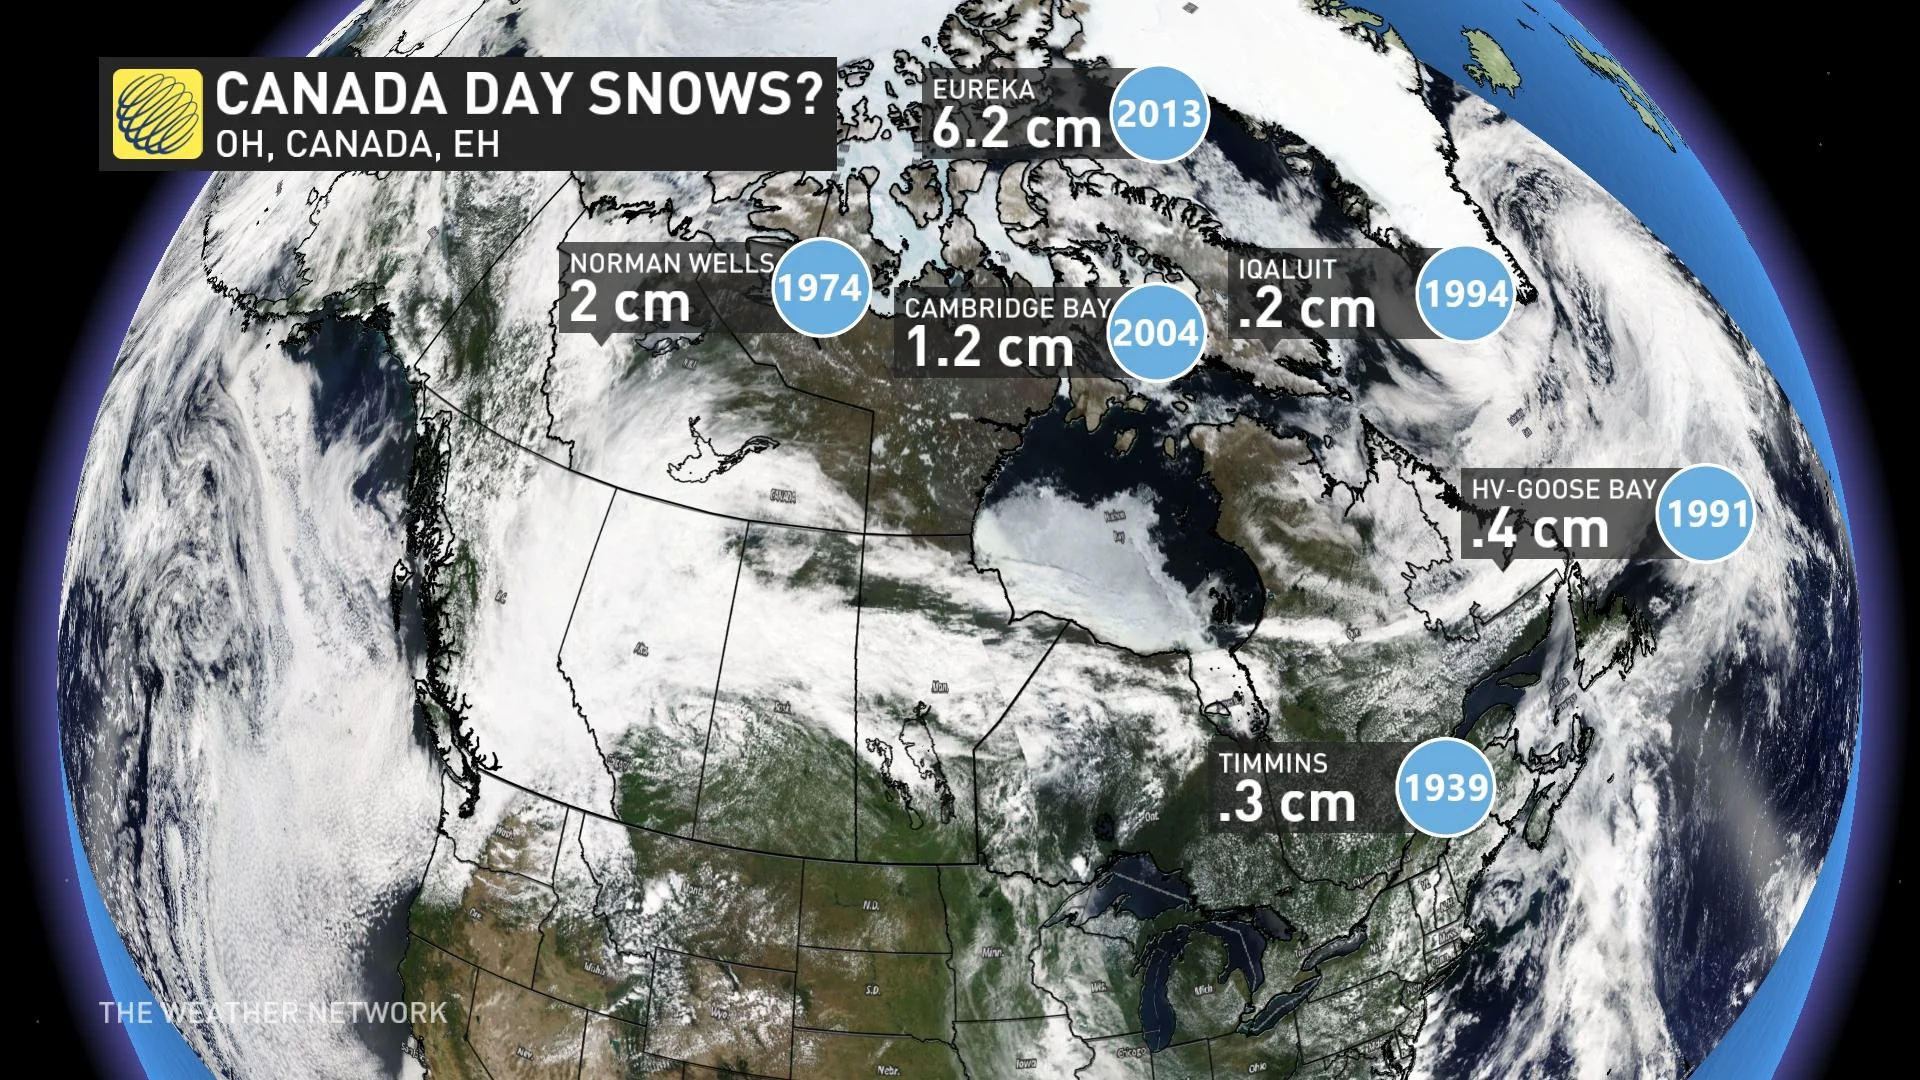 Canada Day Snows